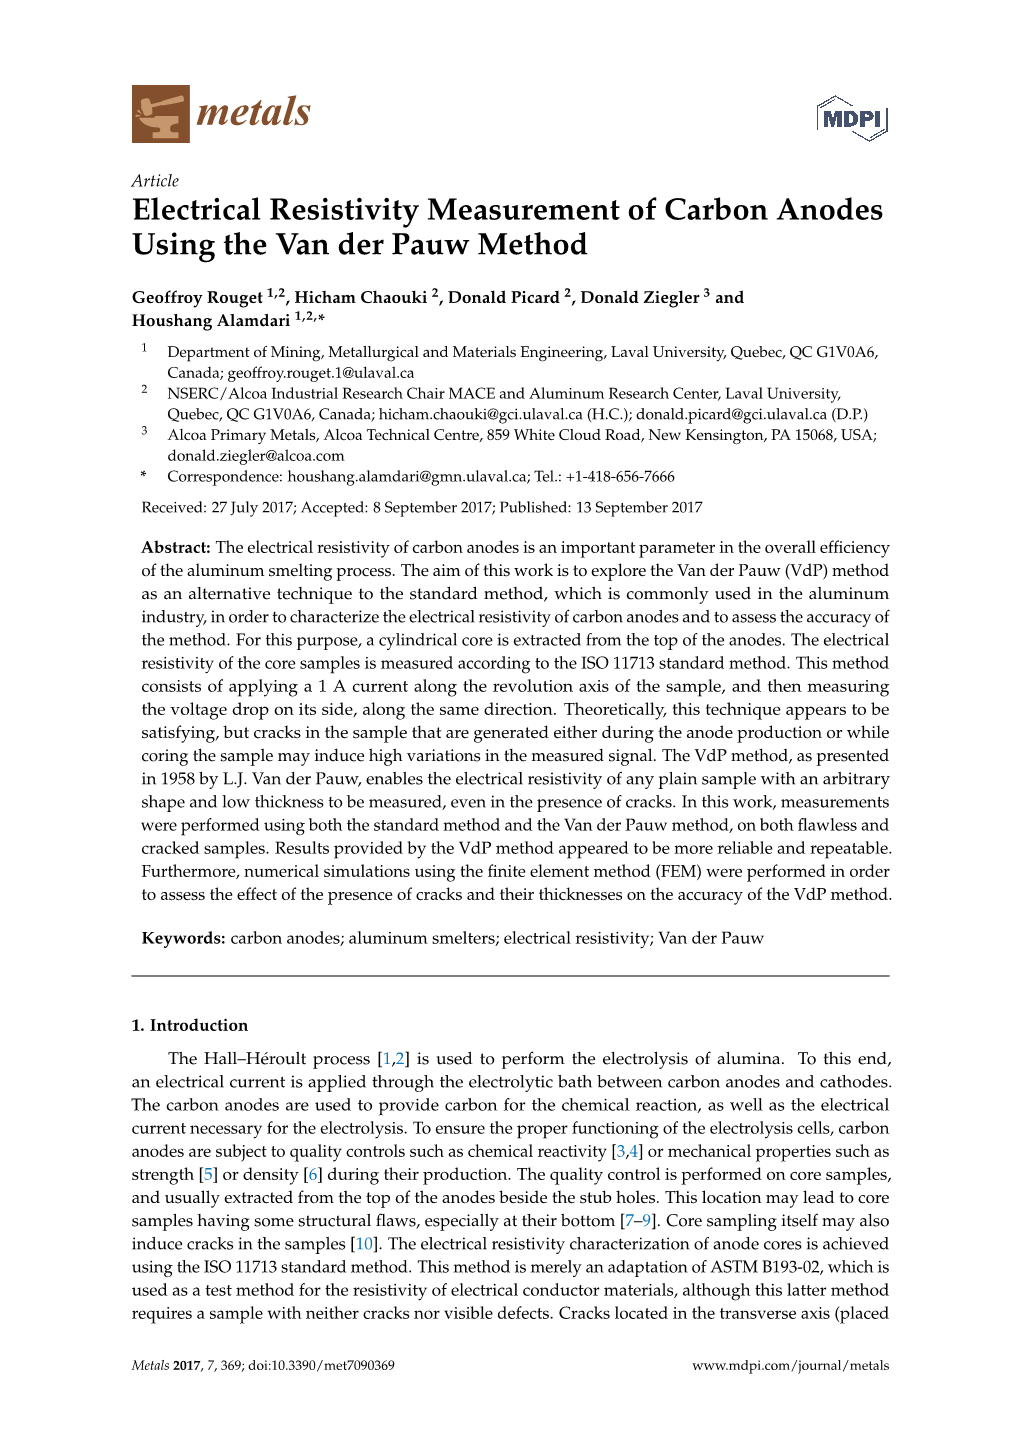 Electrical Resistivity Measurement of Carbon Anodes Using the Van Der Pauw Method